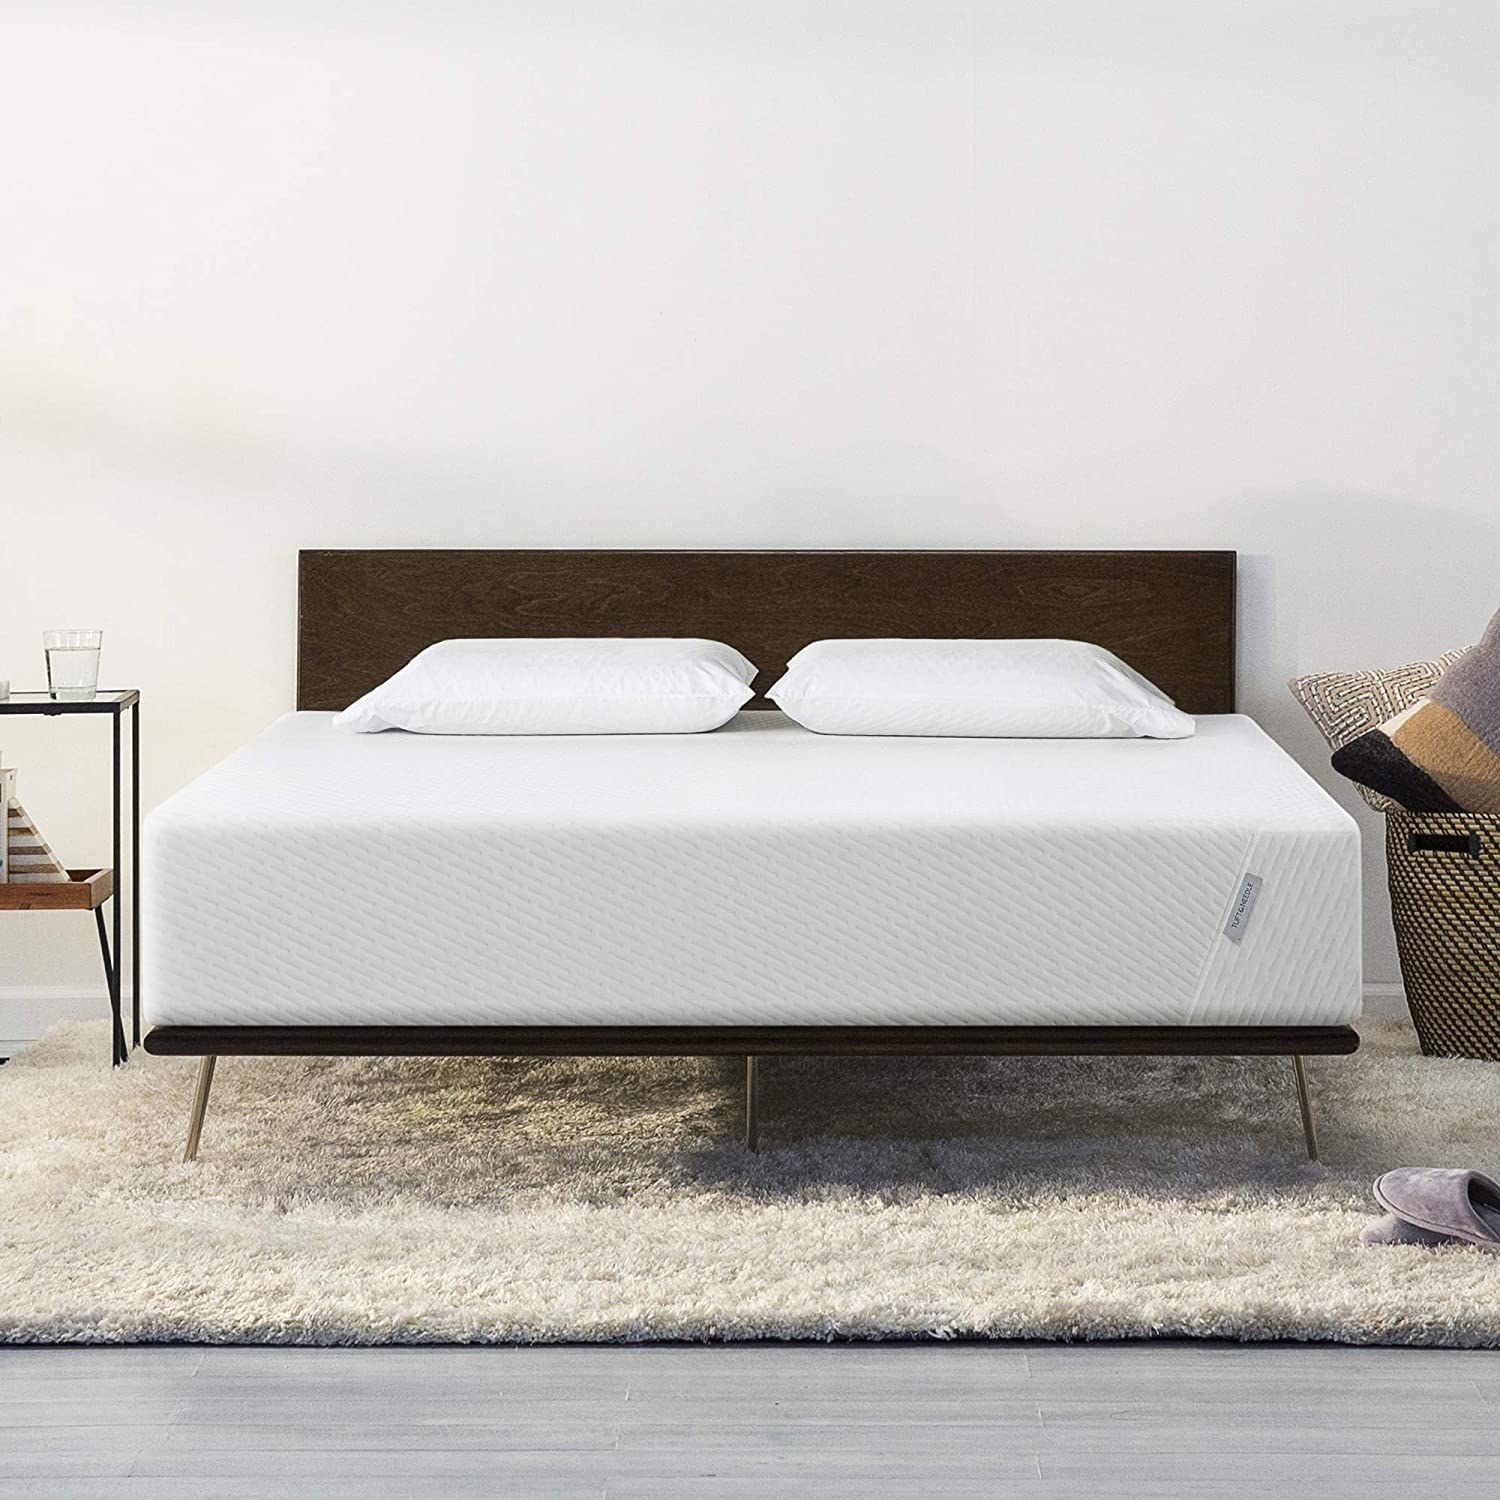 A white mattress on a bed frame 